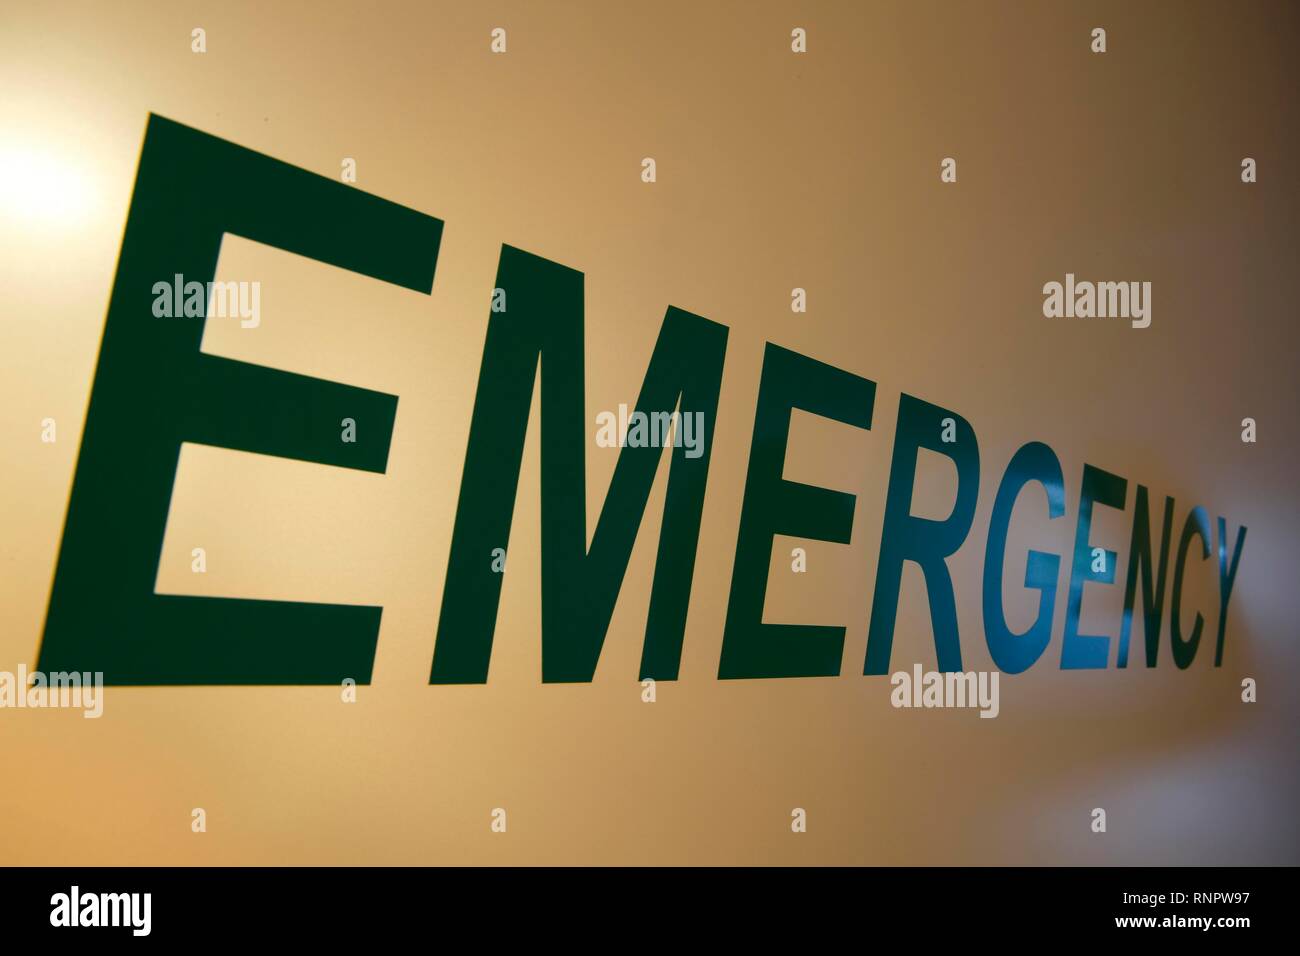 Emergency, Czech Republic Stock Photo